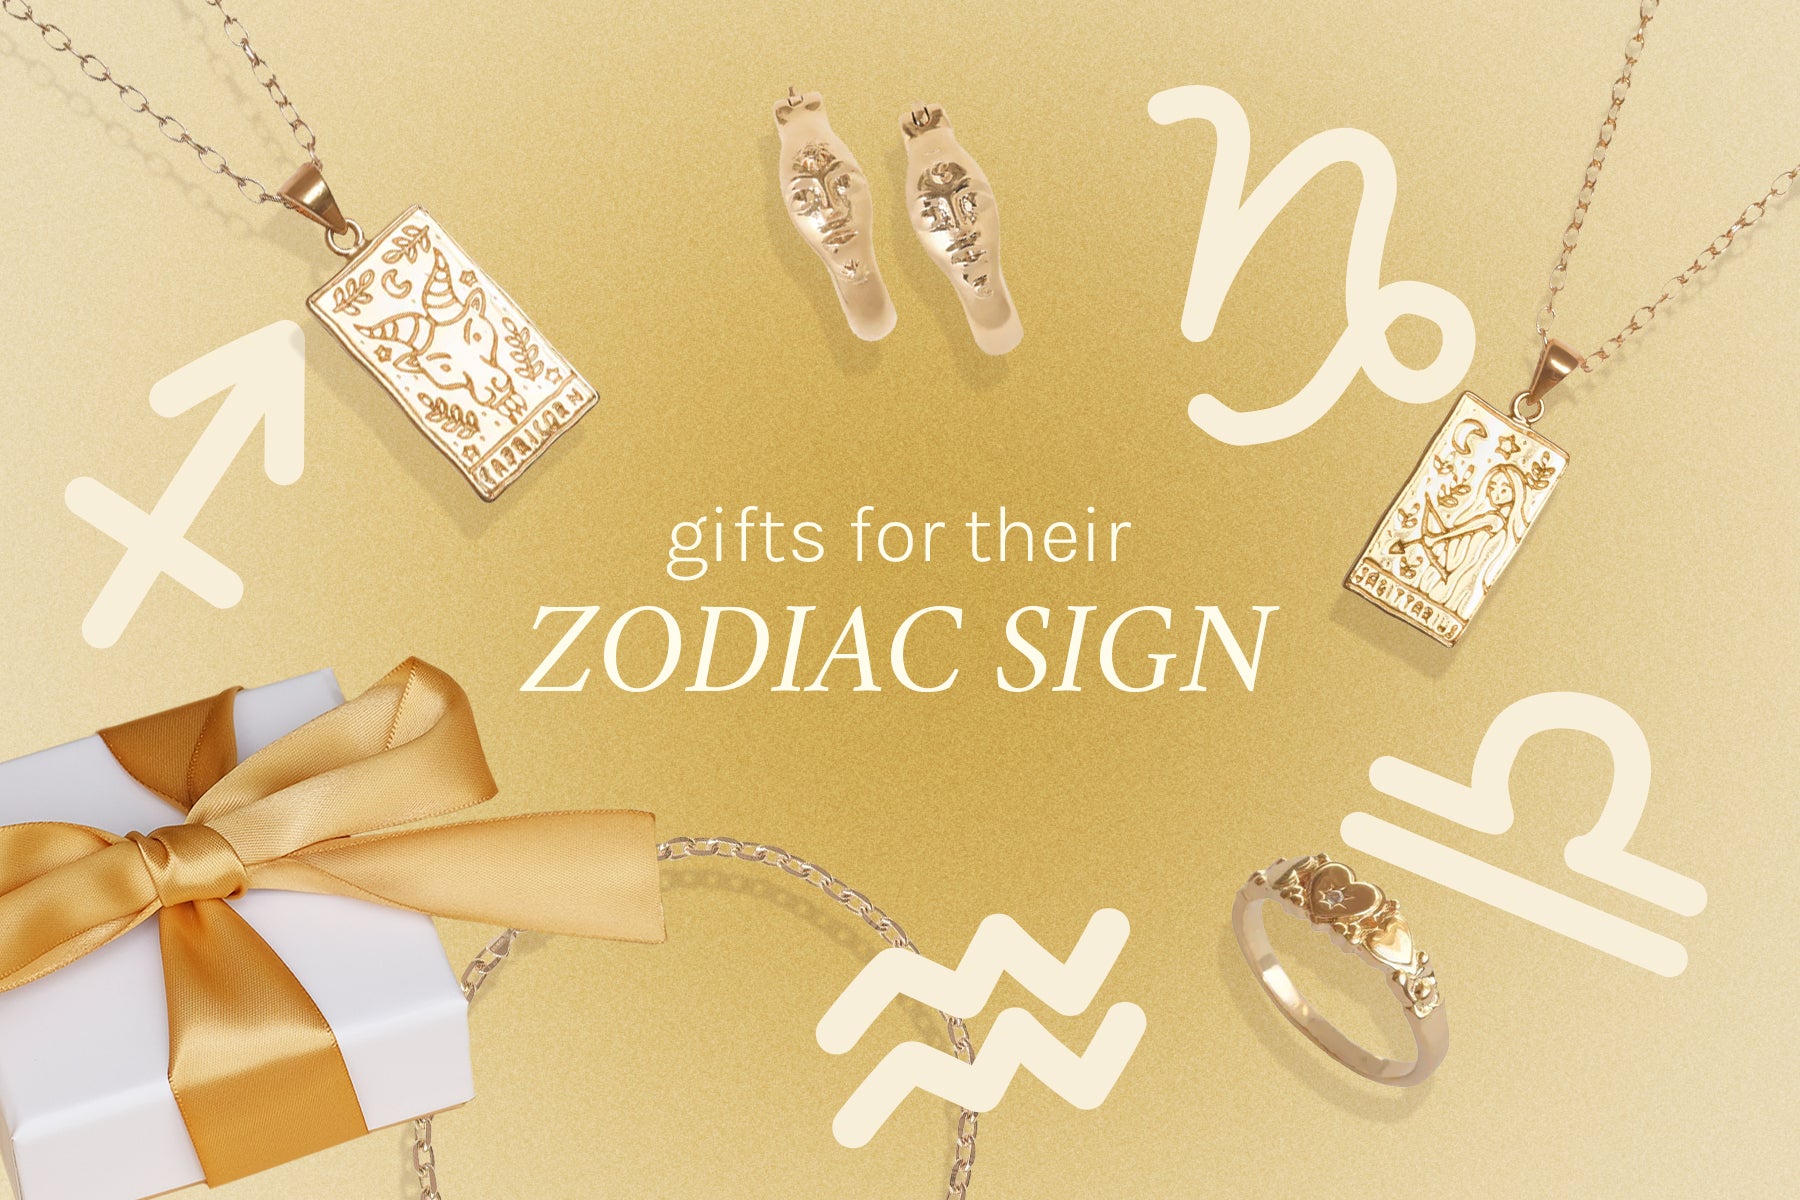 Gift Ideas according to their Zodiac Sign